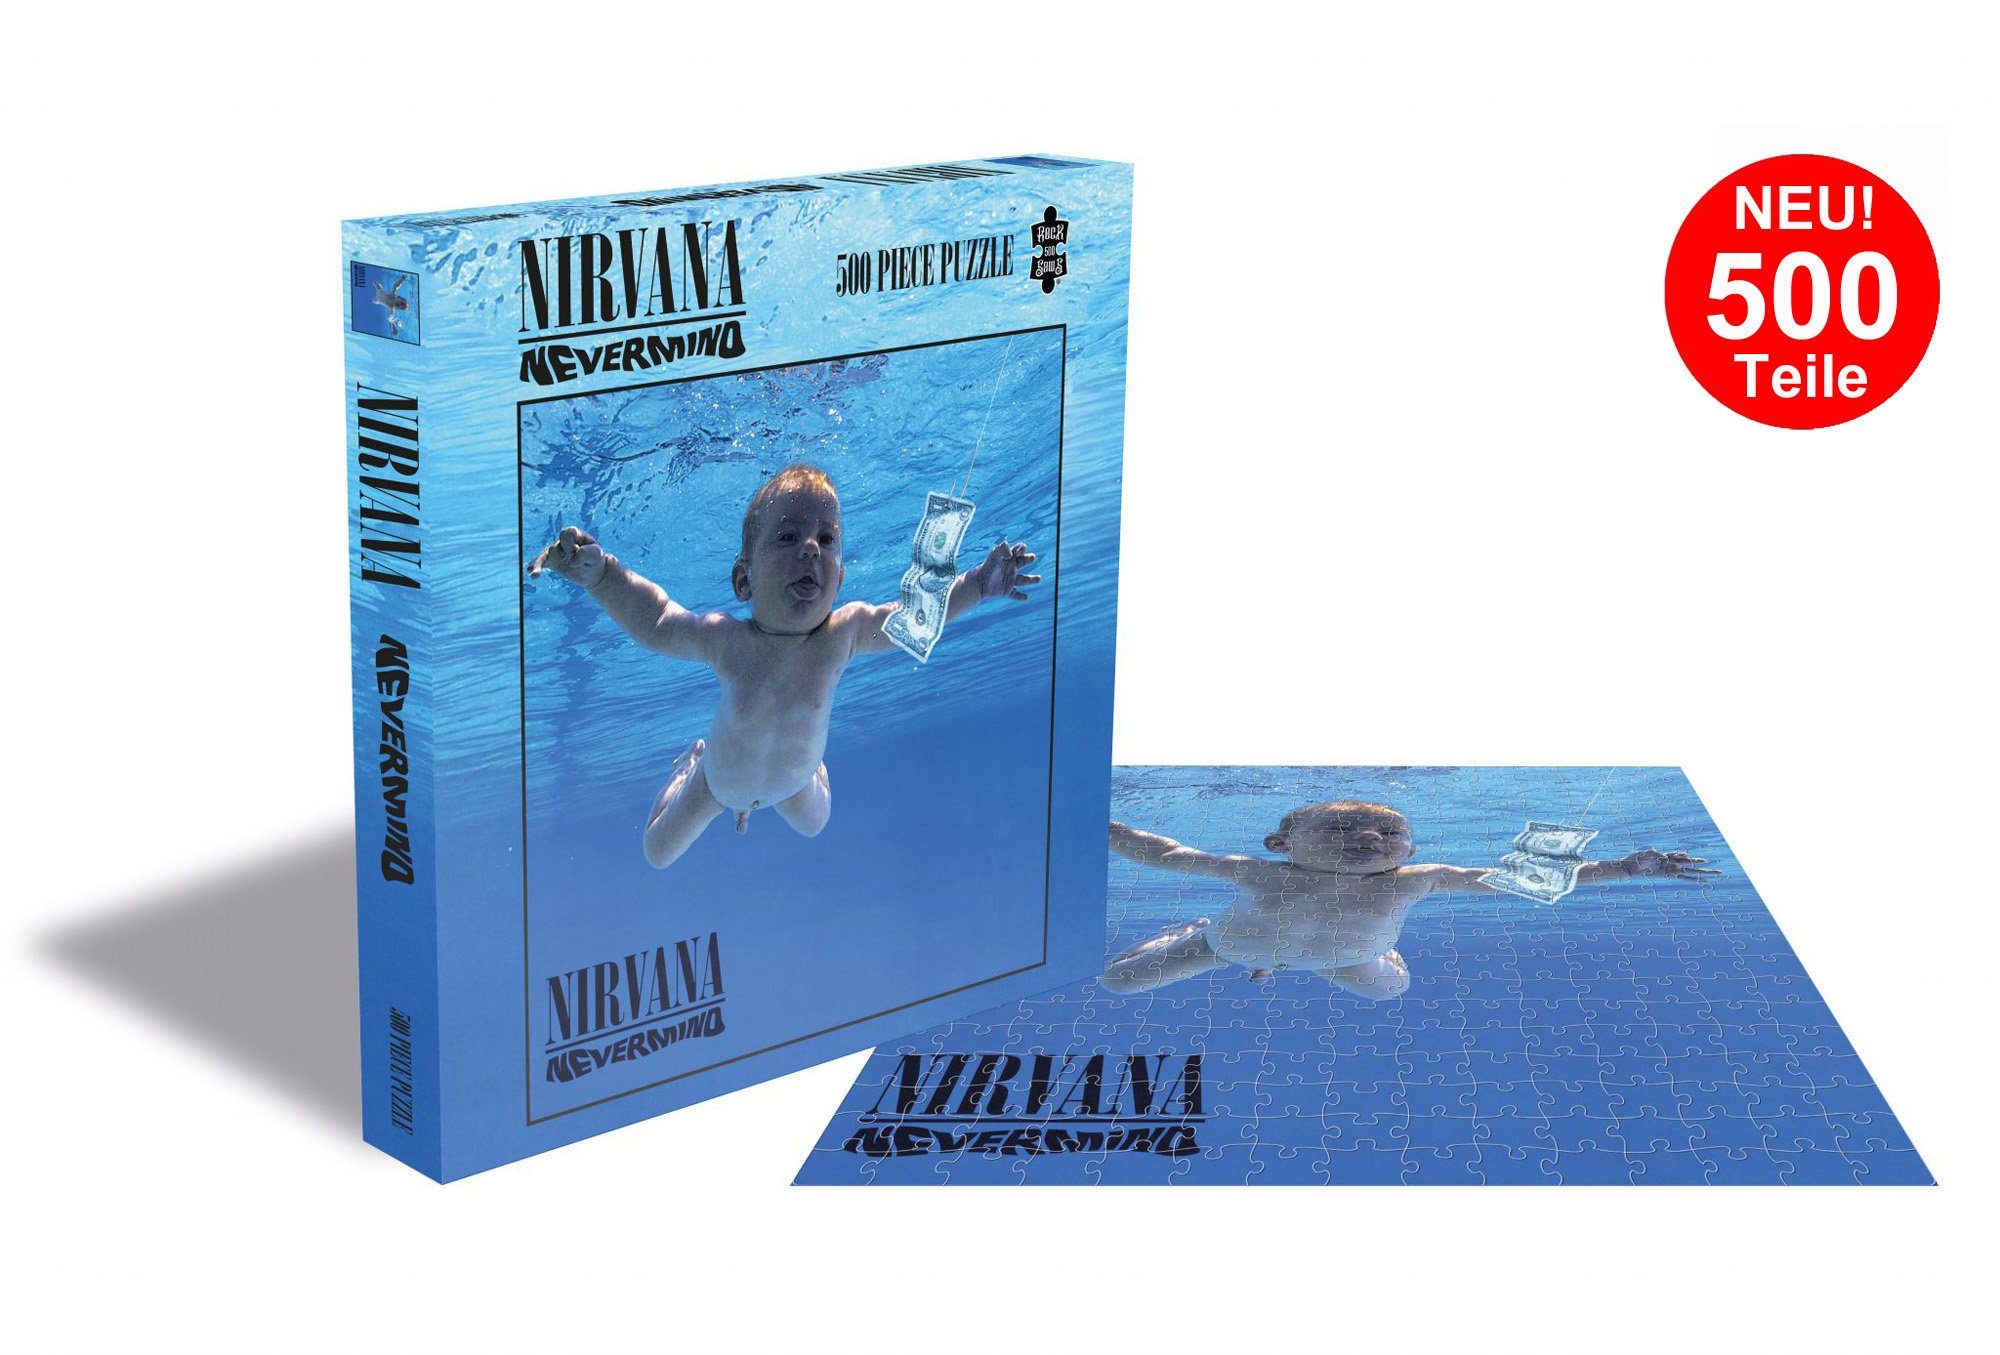 empireposter Puzzle Nirvana Nevermind - 500 Teile LP Cover Puzzle im Format 39x39 cm, 500 Puzzleteile